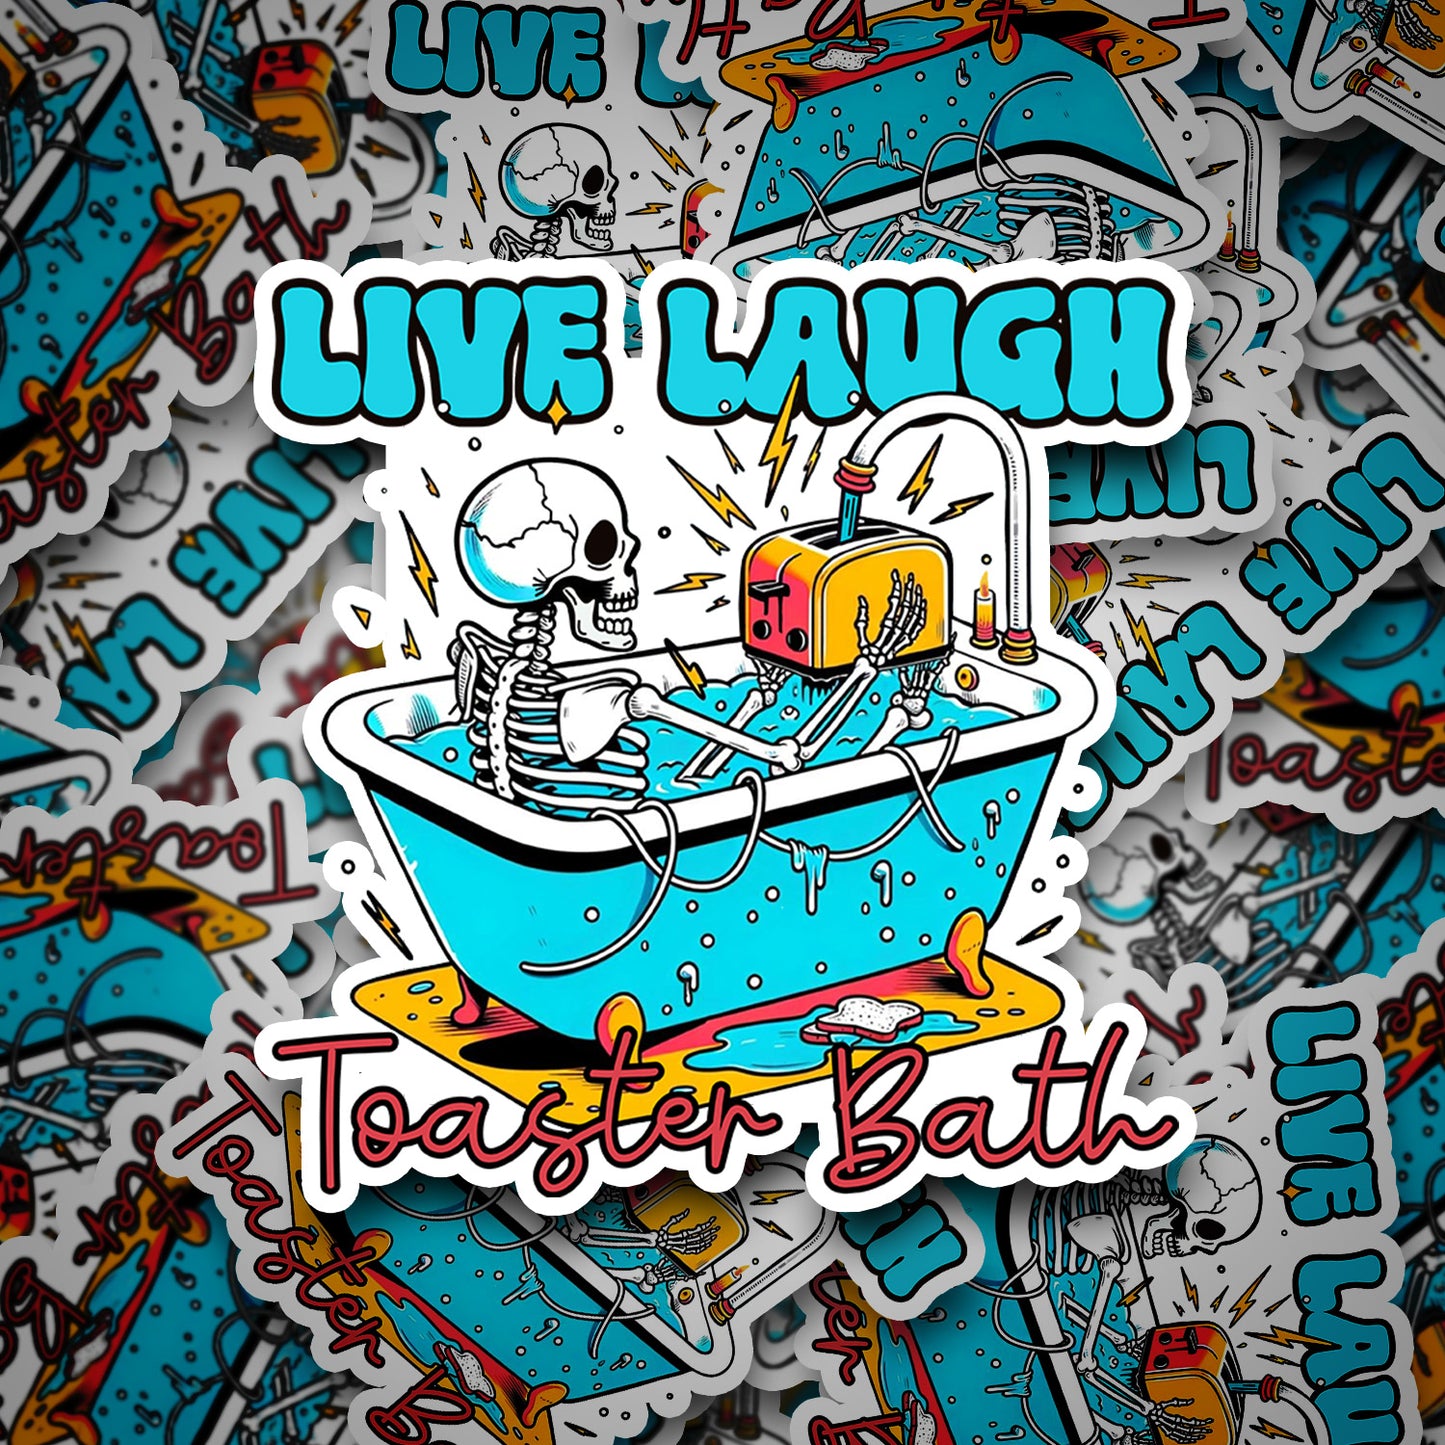 Live laugh toaster bath sticker